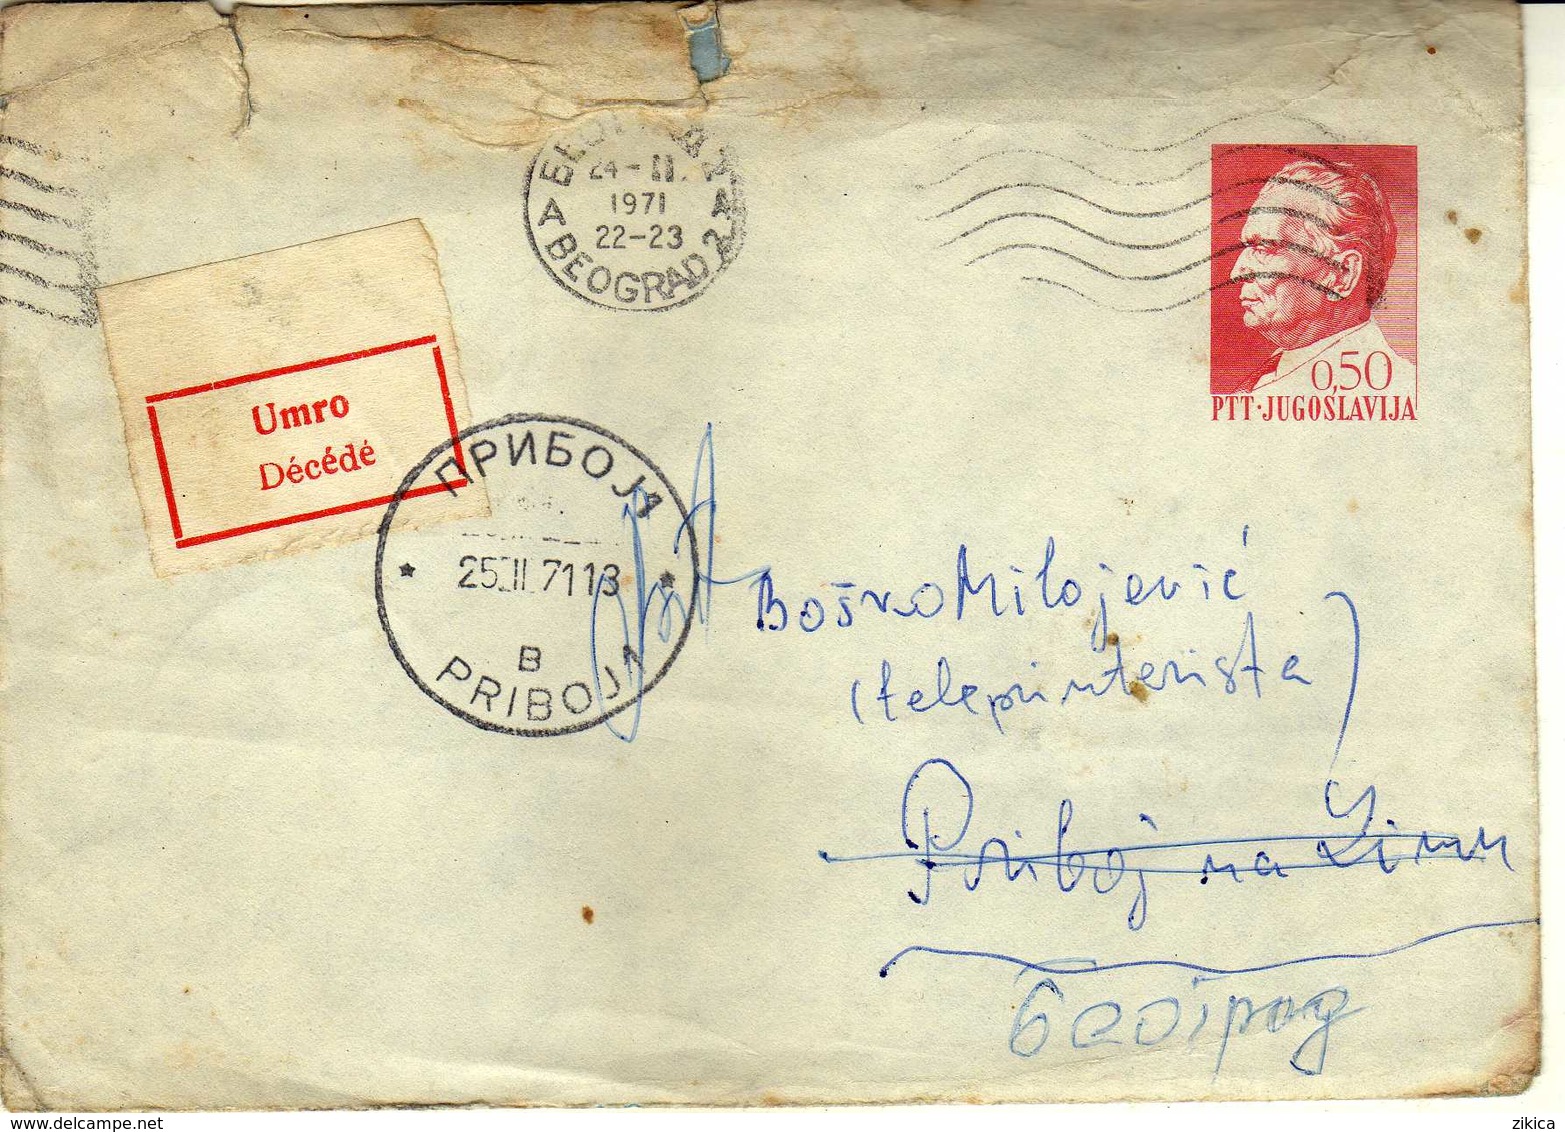 Yugoslavia Postal Stationery 1971 - Priboj ( Post Label - Decede ) - Storia Postale